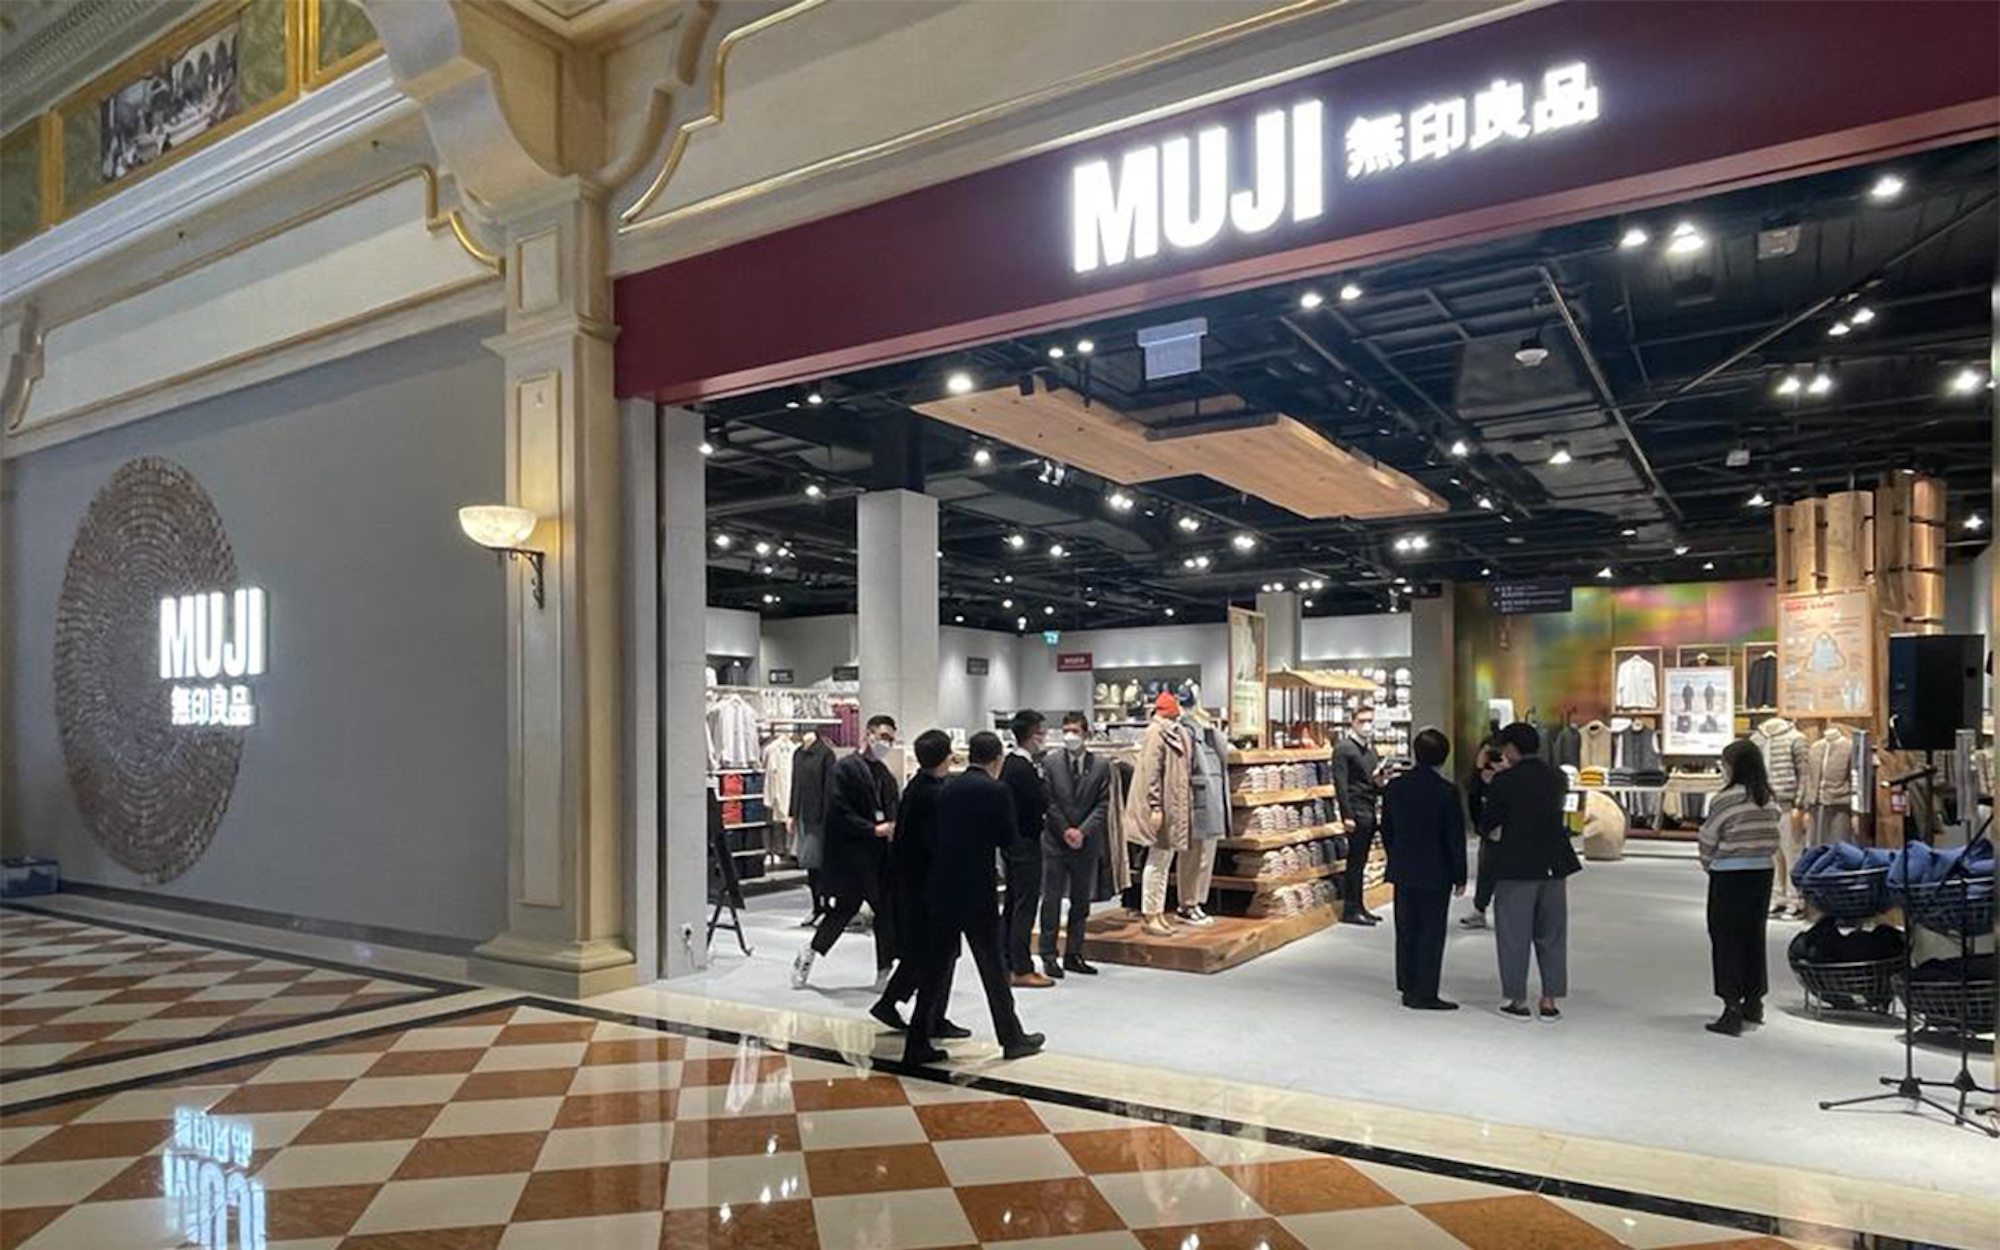 MUJI’s first Macao store opens